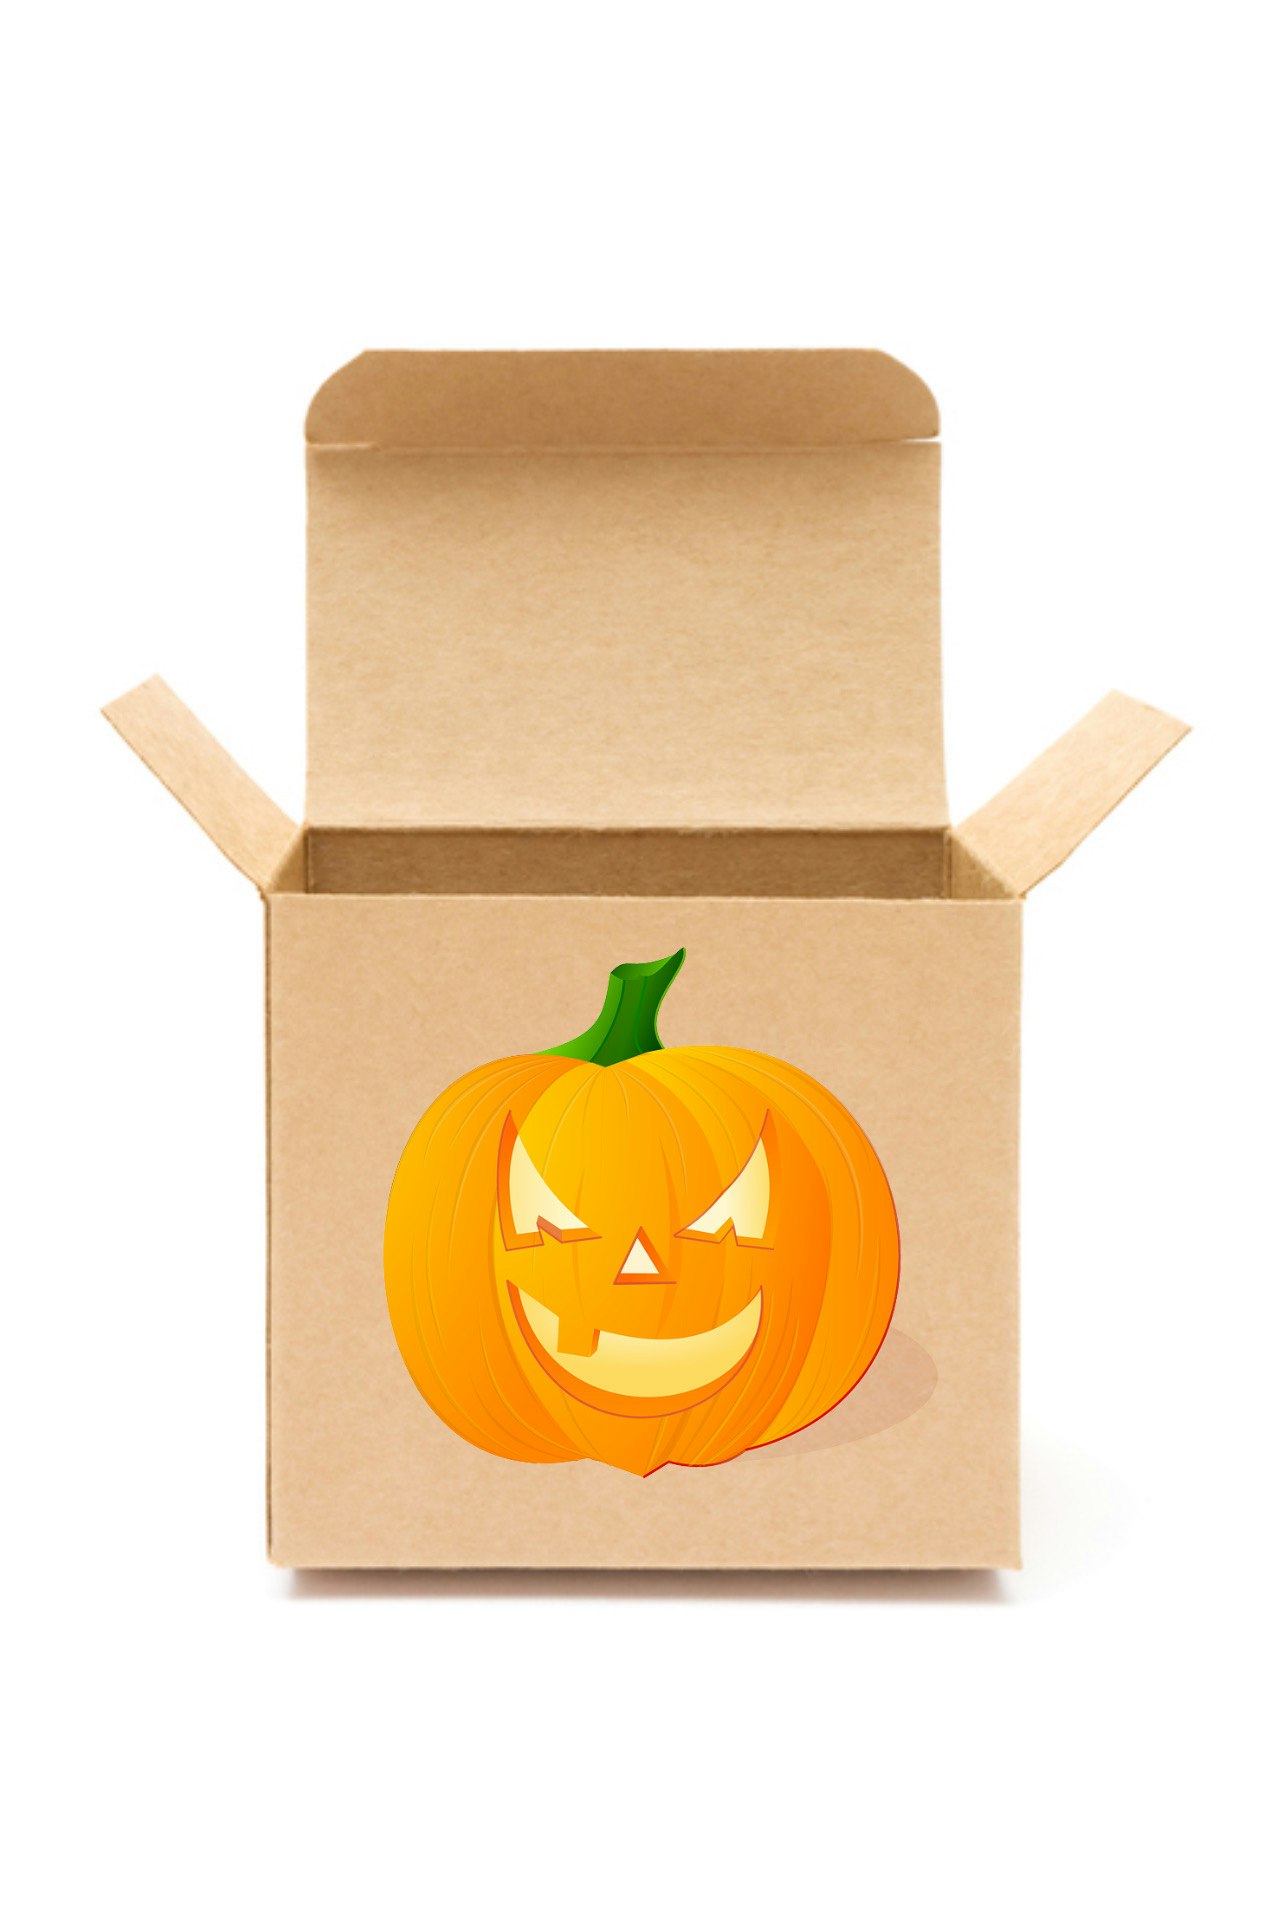 Pumpkin box 2